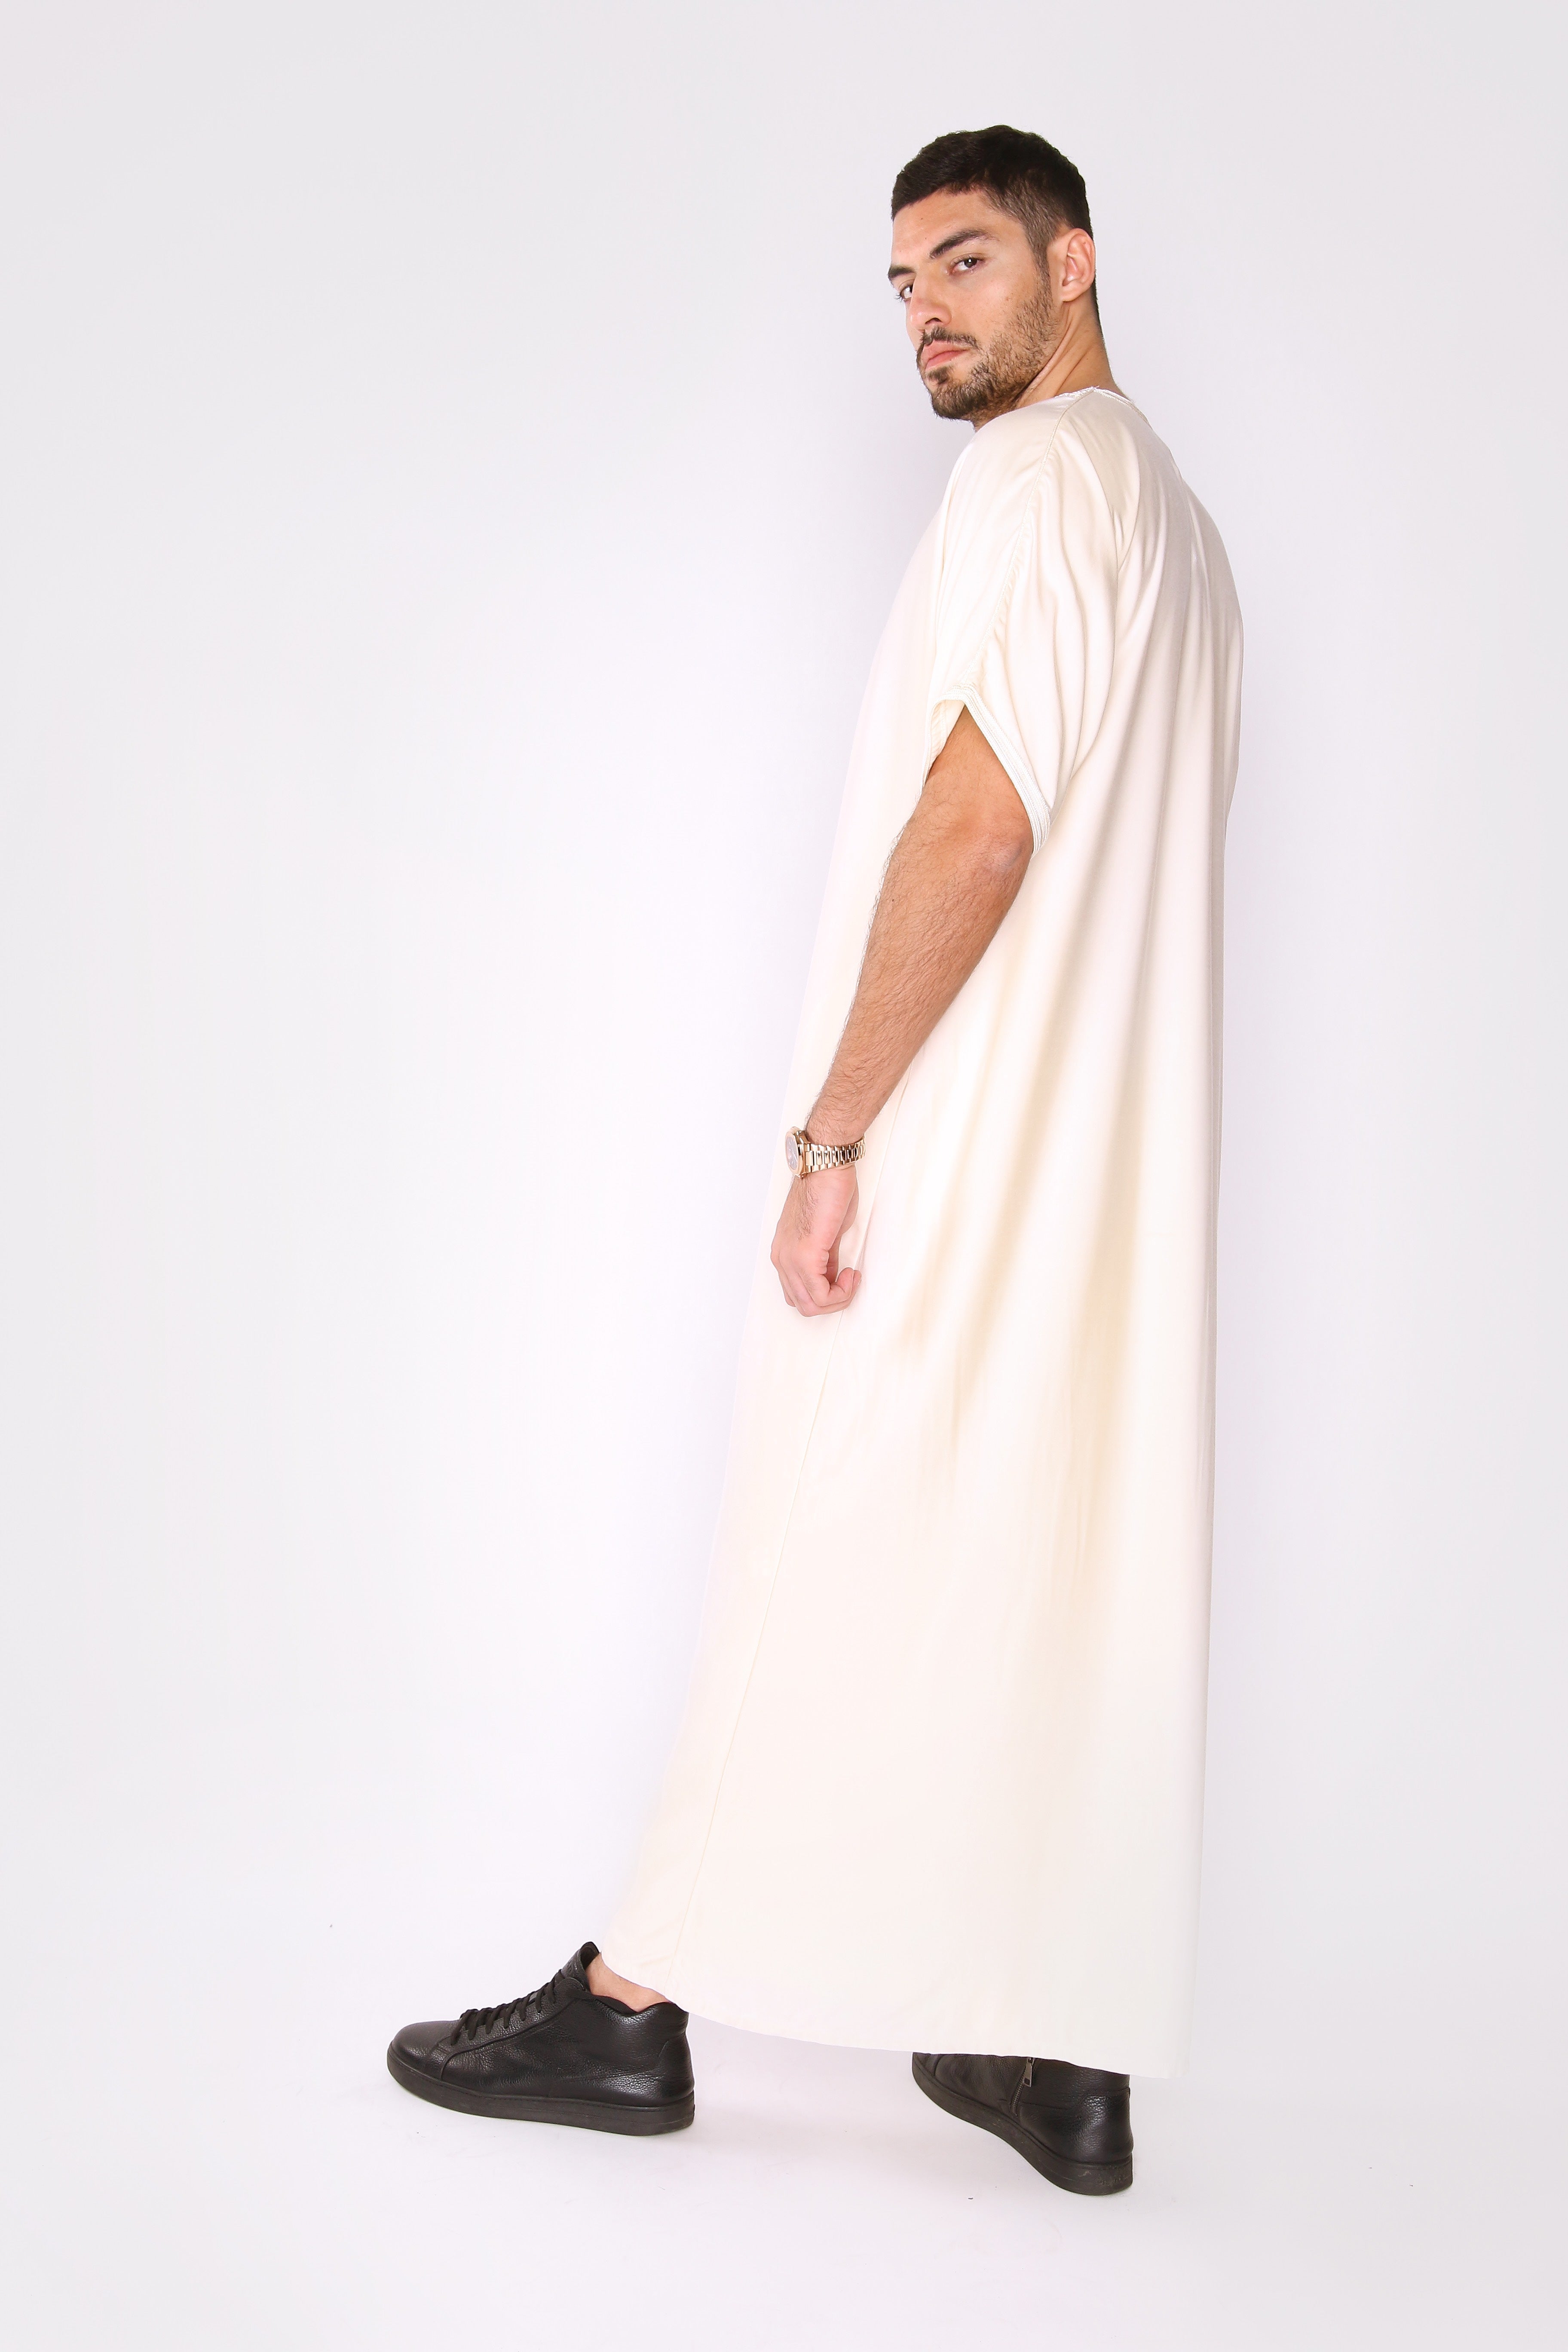 Gandoura Idriss Men's Embroidered Short Sleeve Full-Length Robe Thobe in Bright White